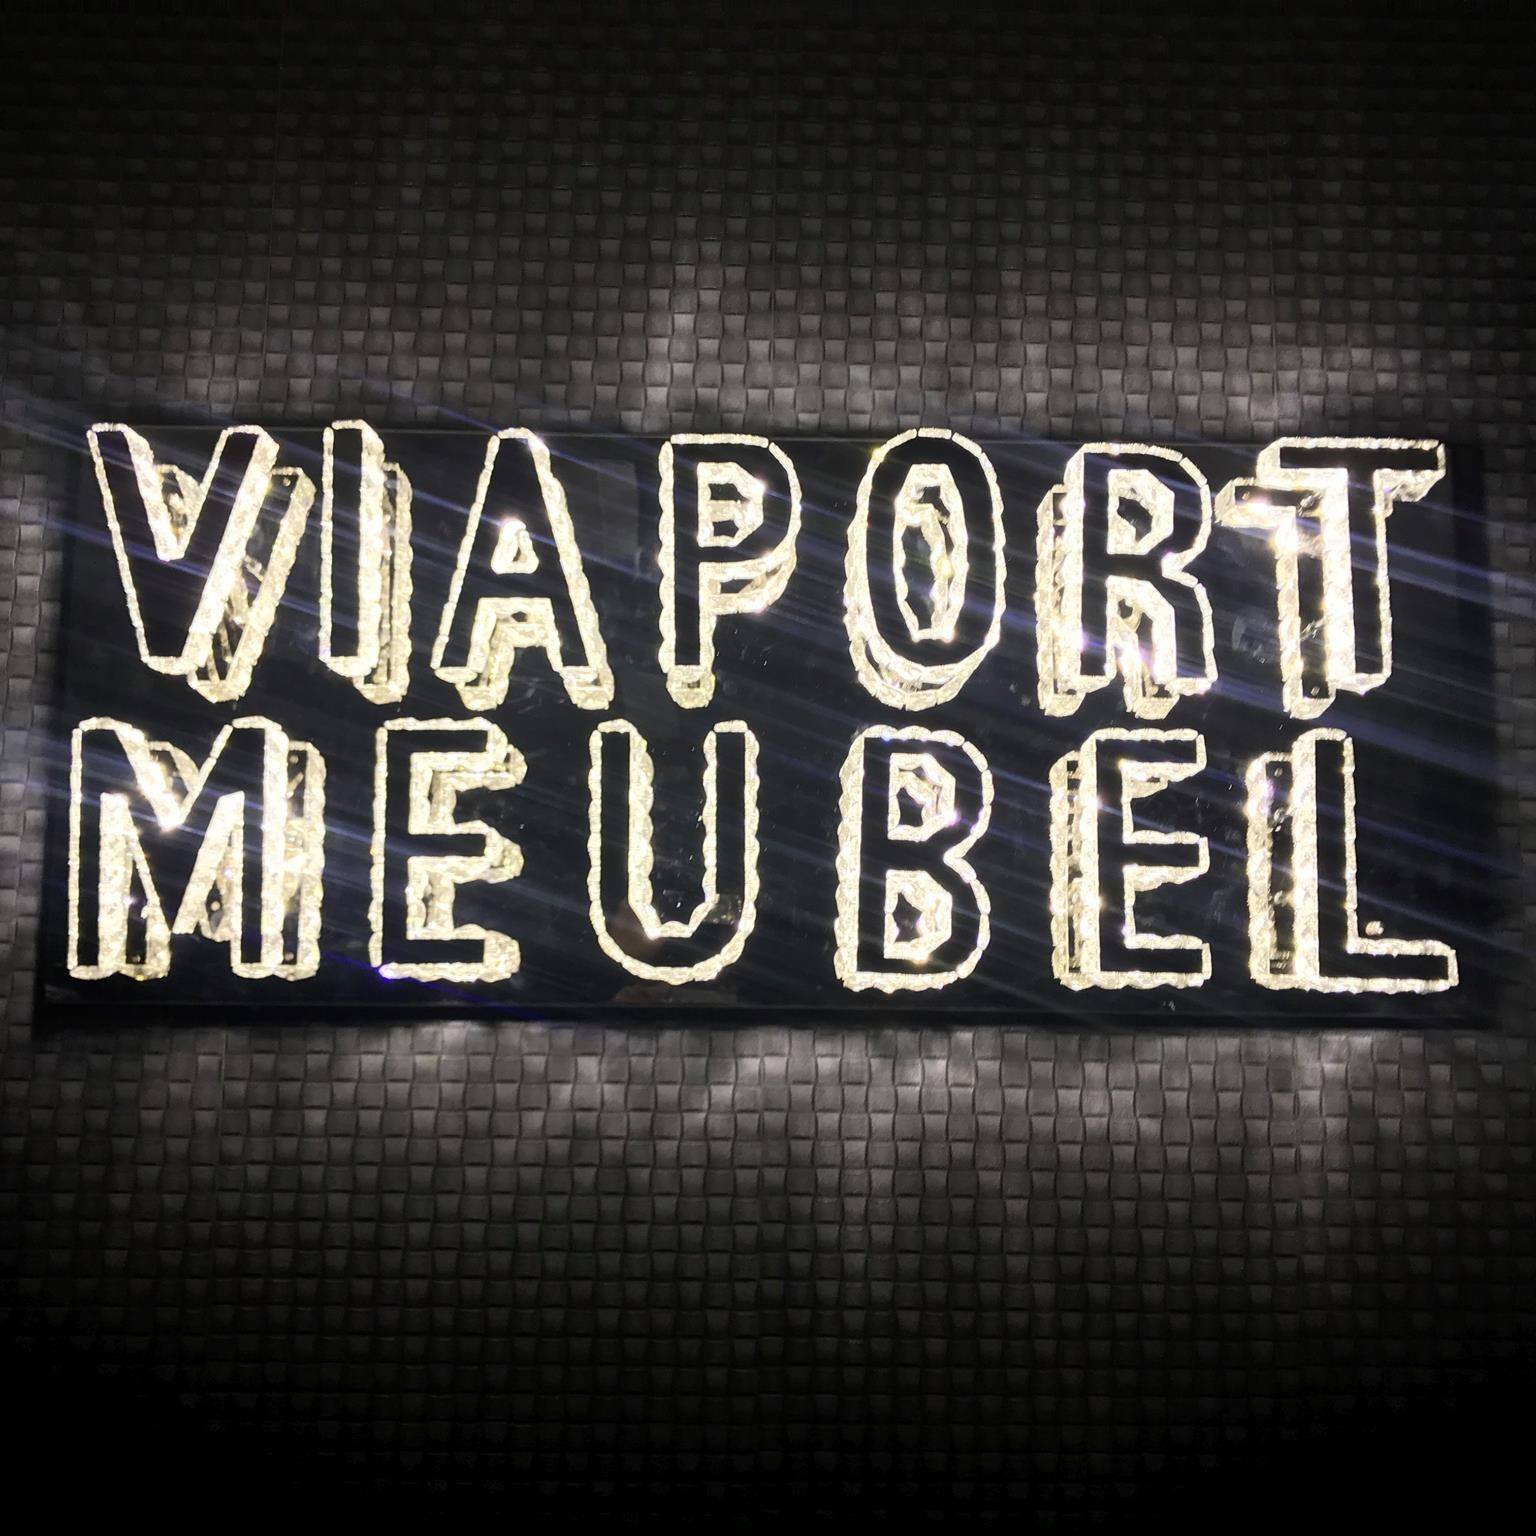 Viaport Meubel